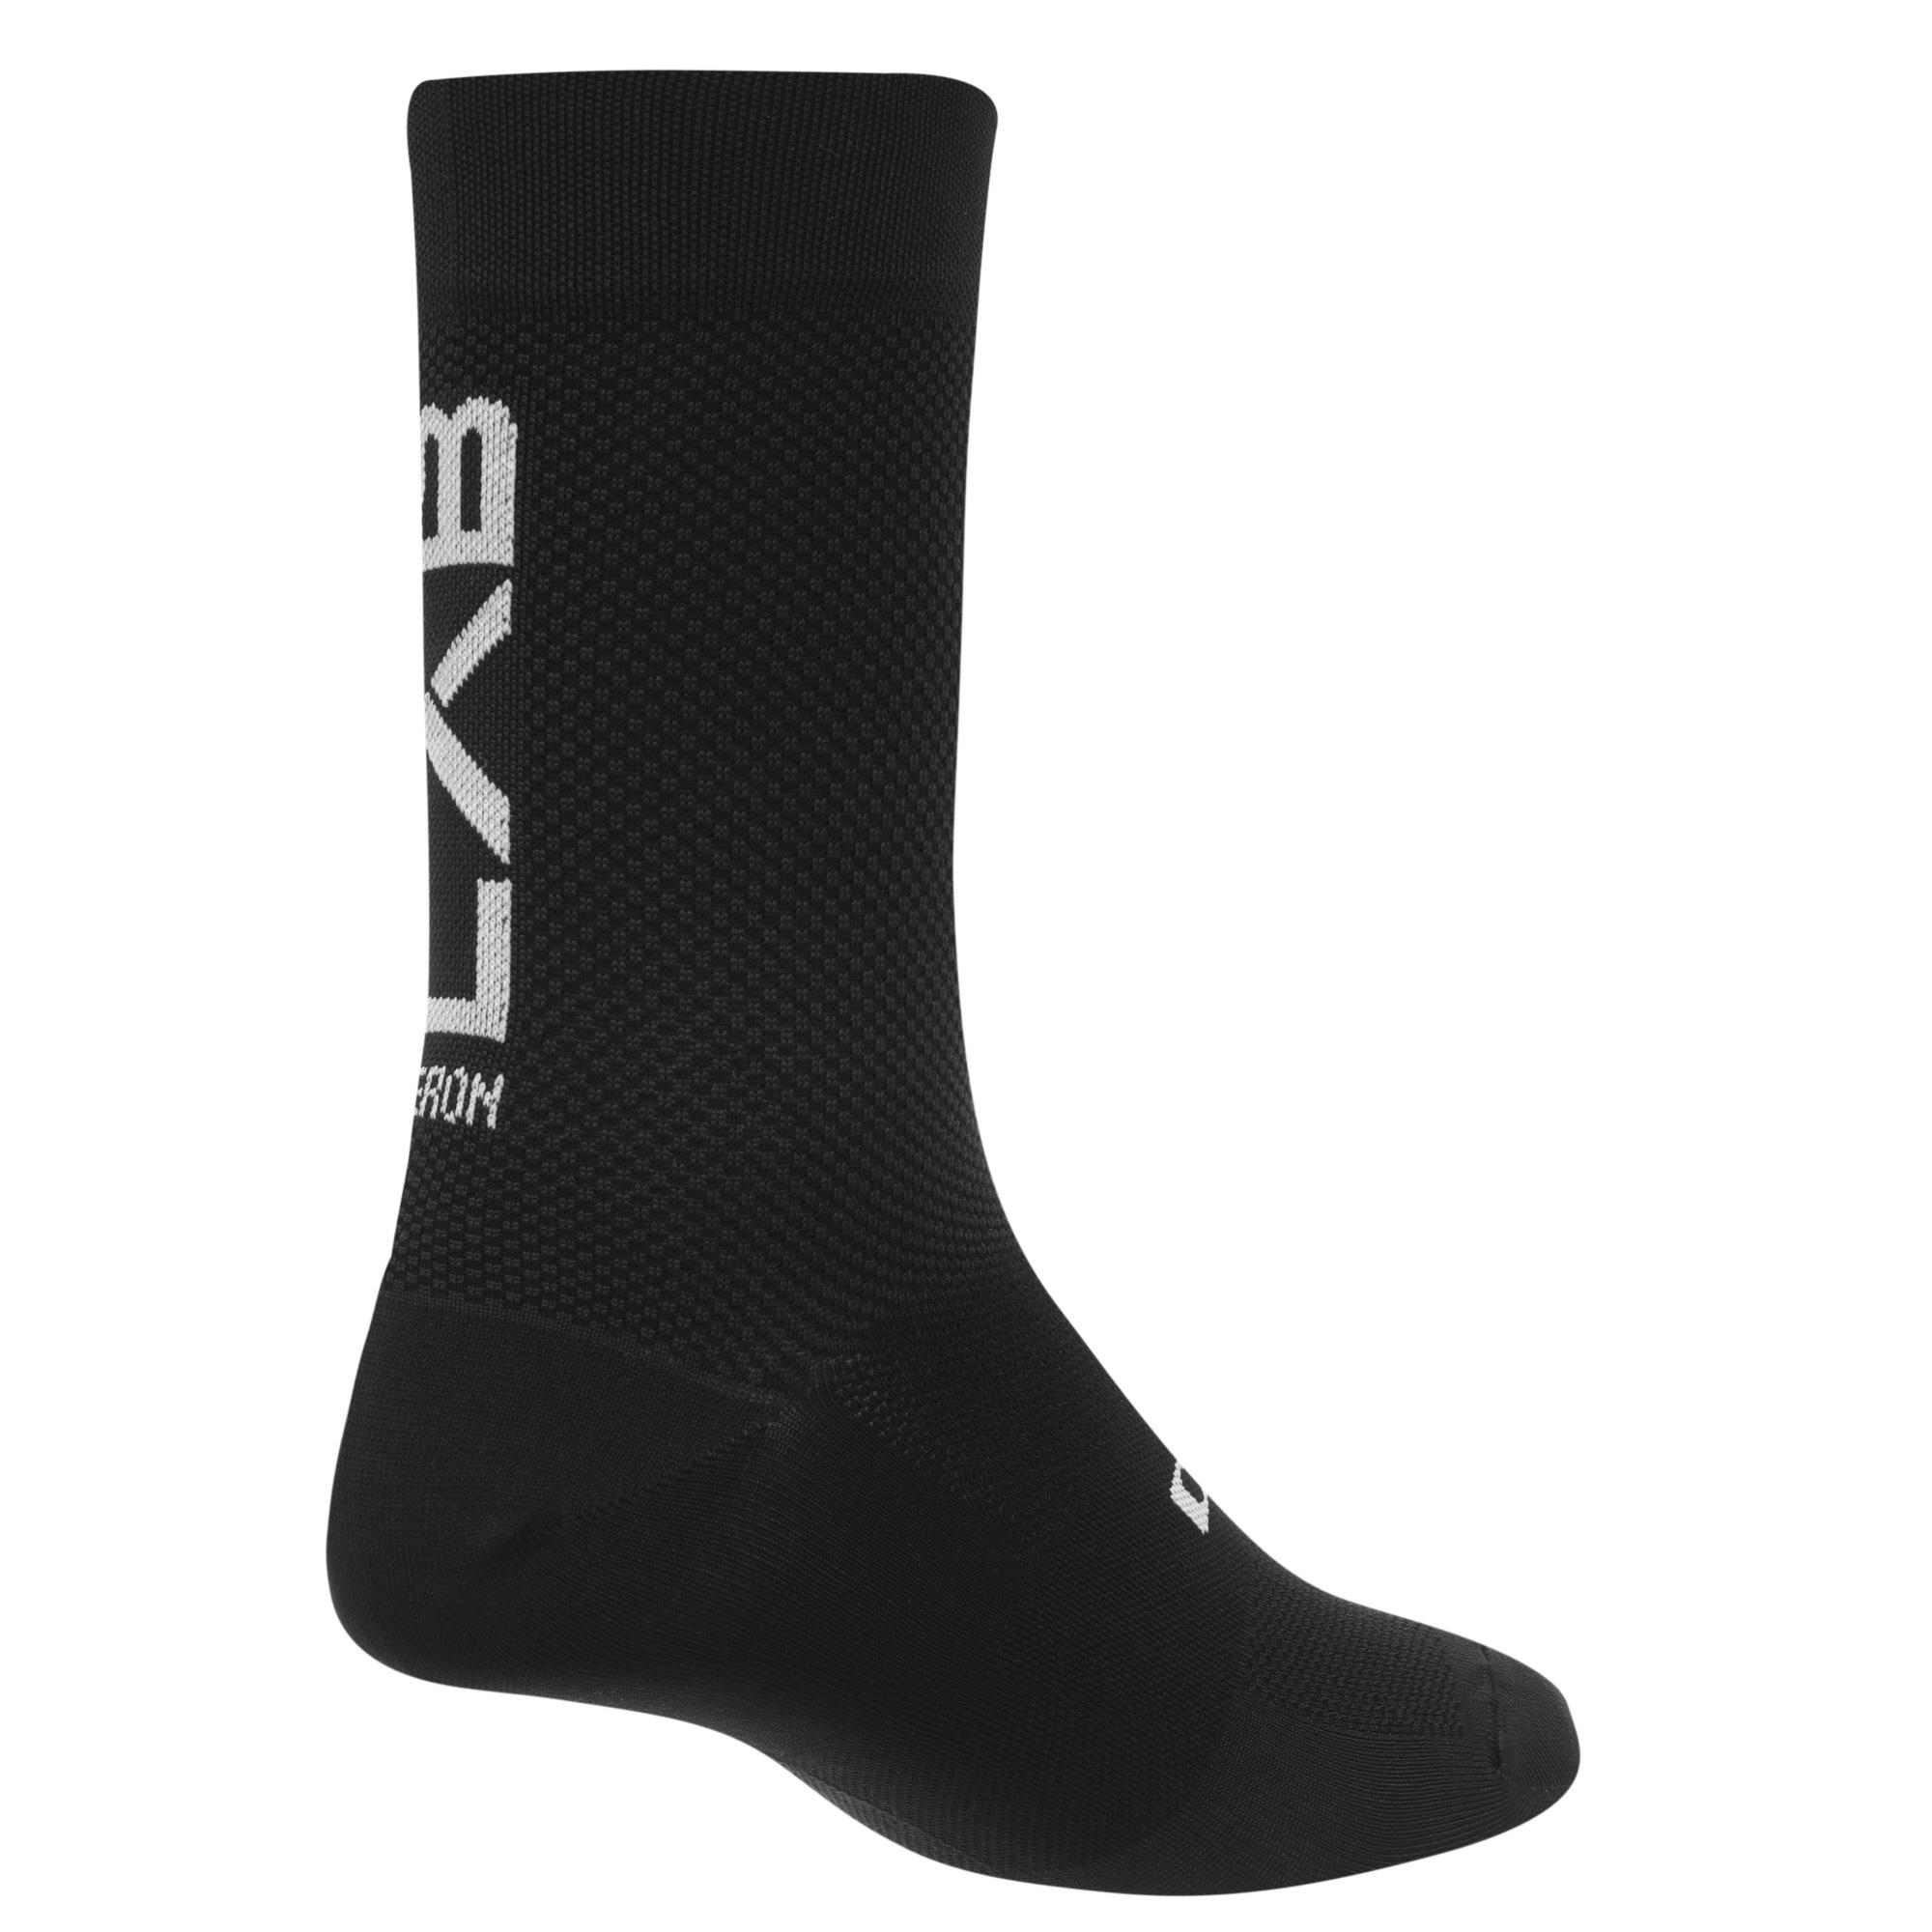 Dhb Aeron Lab Sock  Black/white